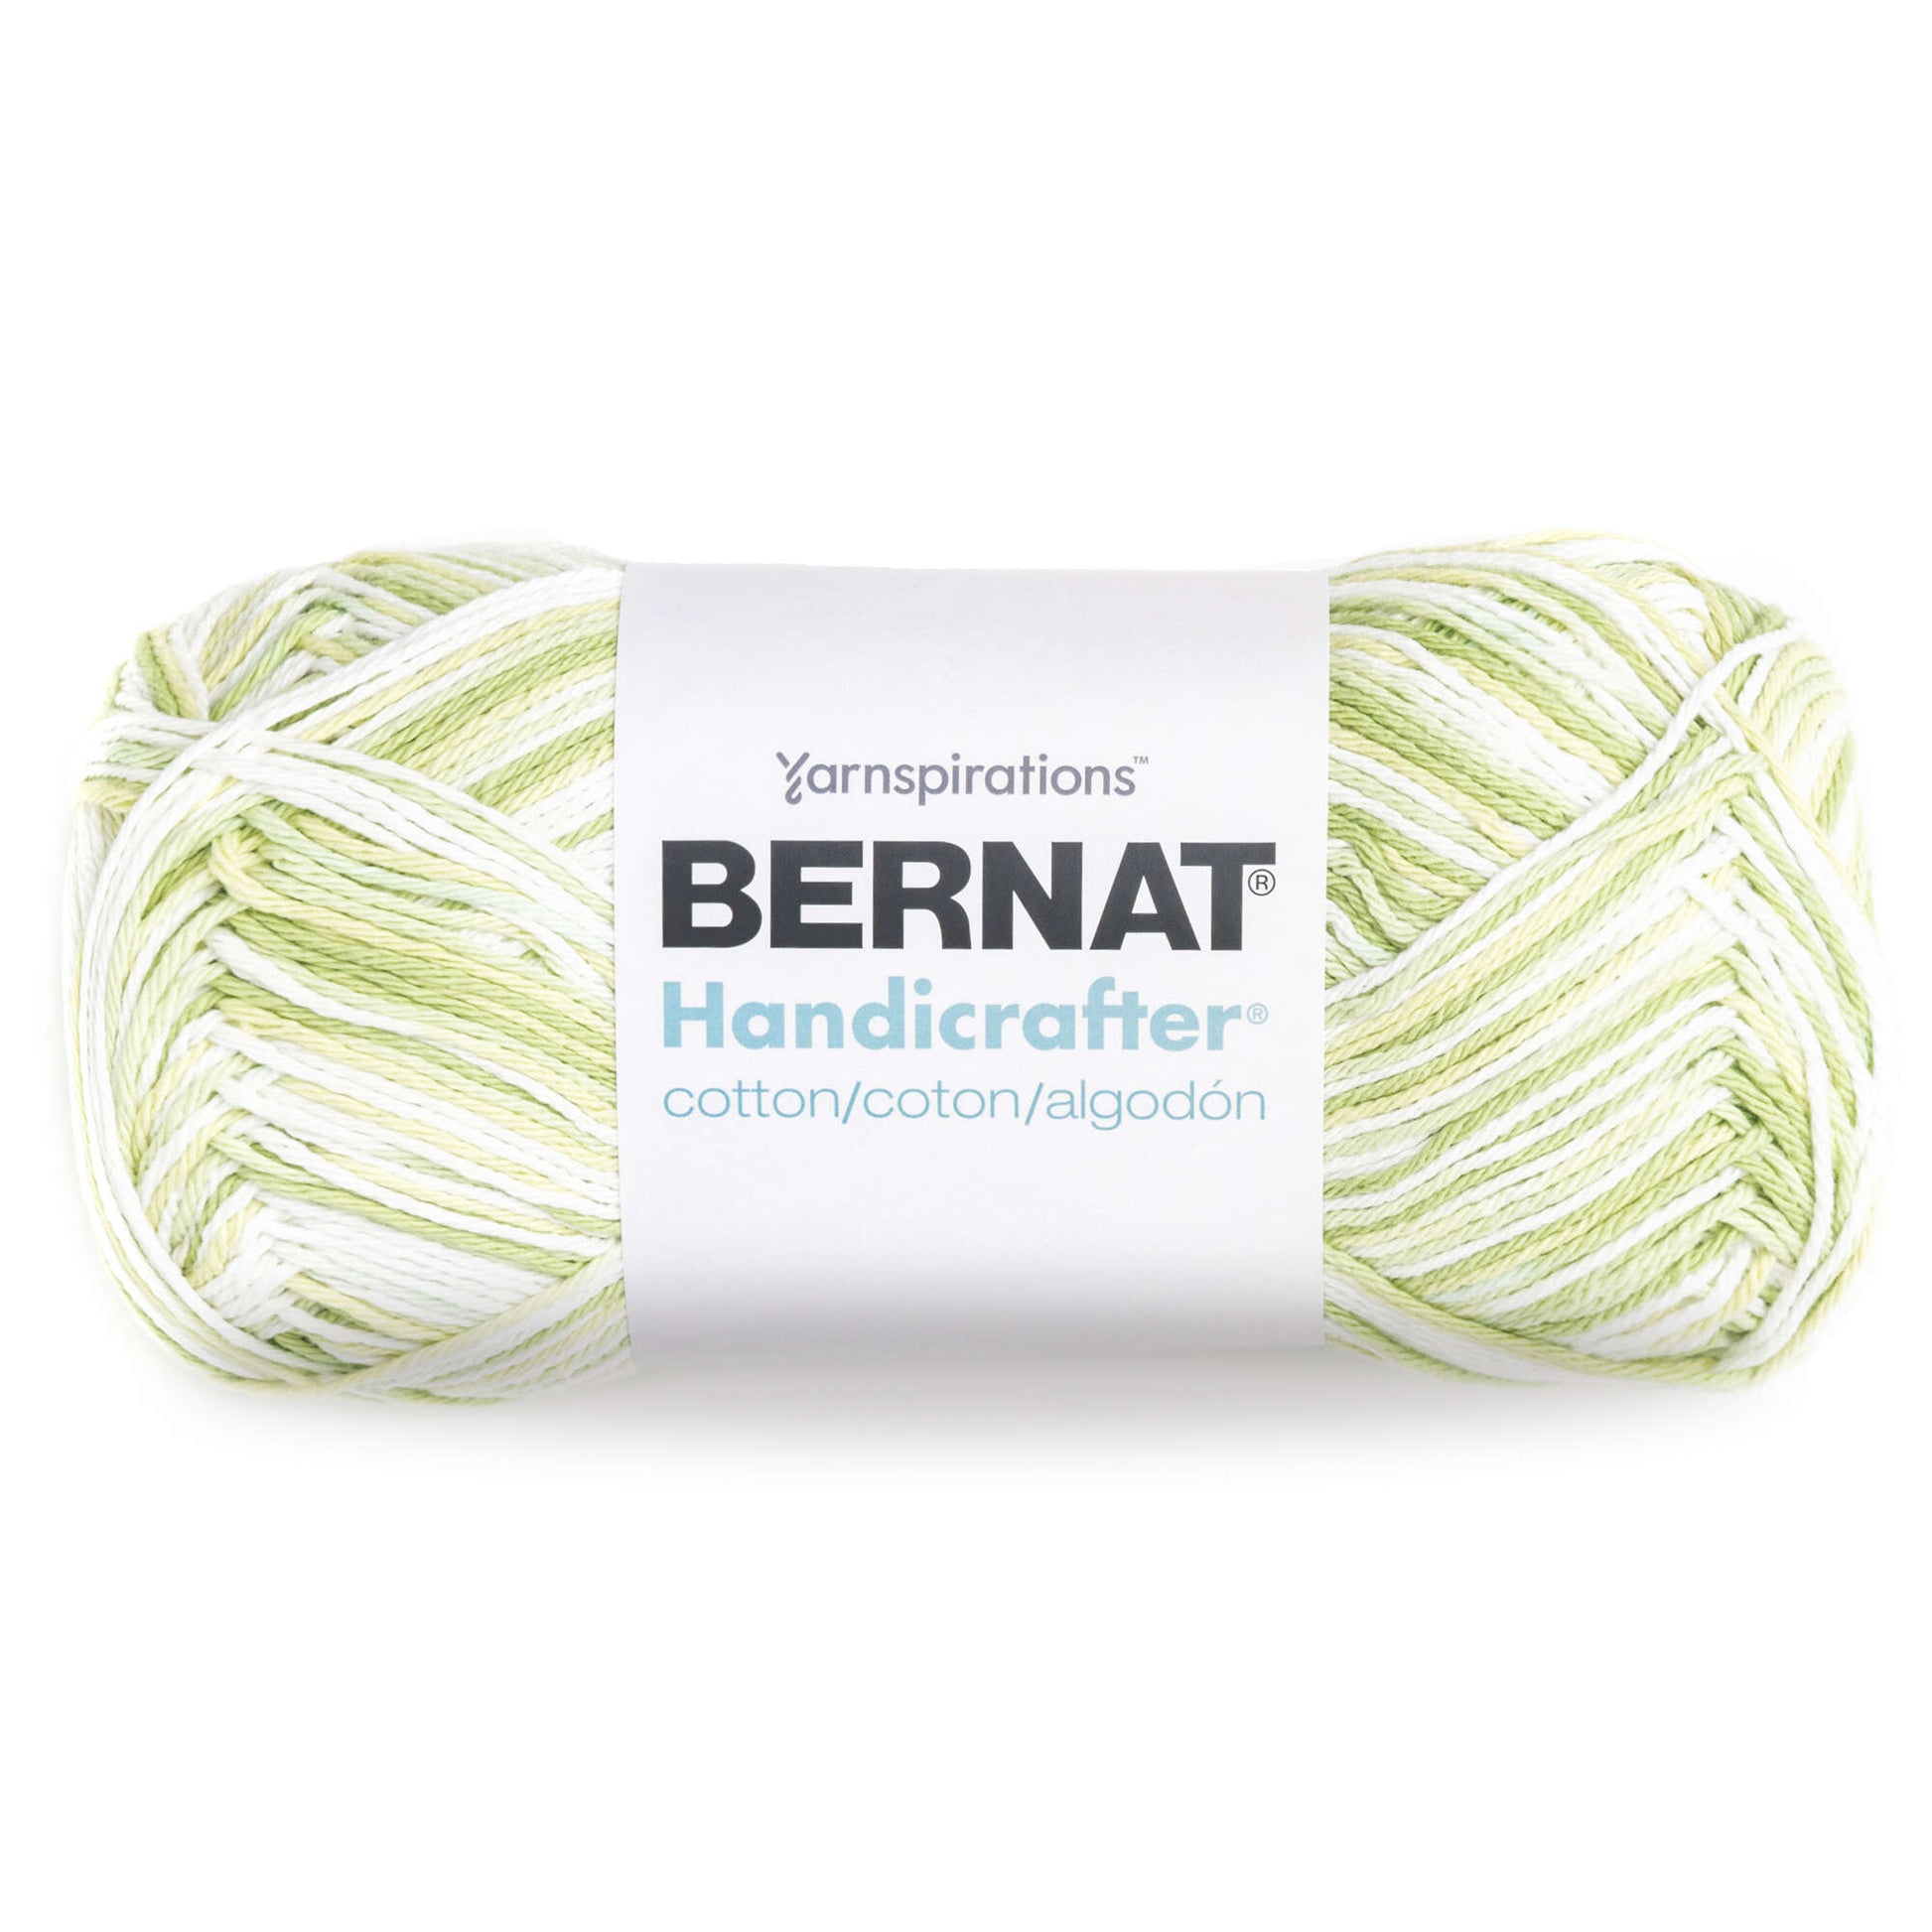 Bernat Handicrafter Cotton Ombres Yarn (340g/12oz) Key Lime Pie